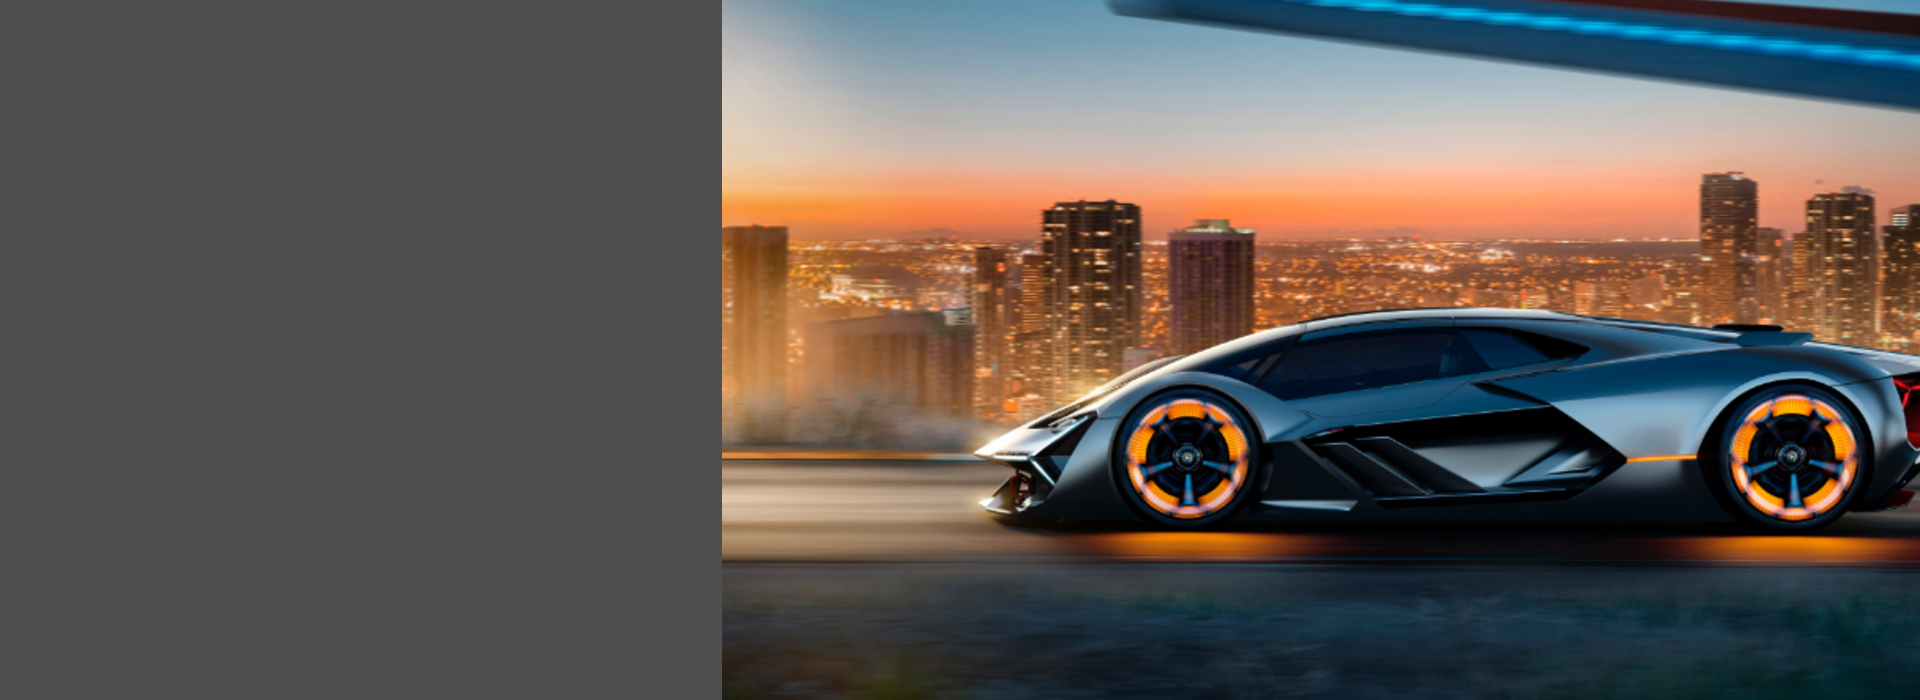 Lamborghini LB48H (Terzo Millennio) Electric Hypercar is Set for